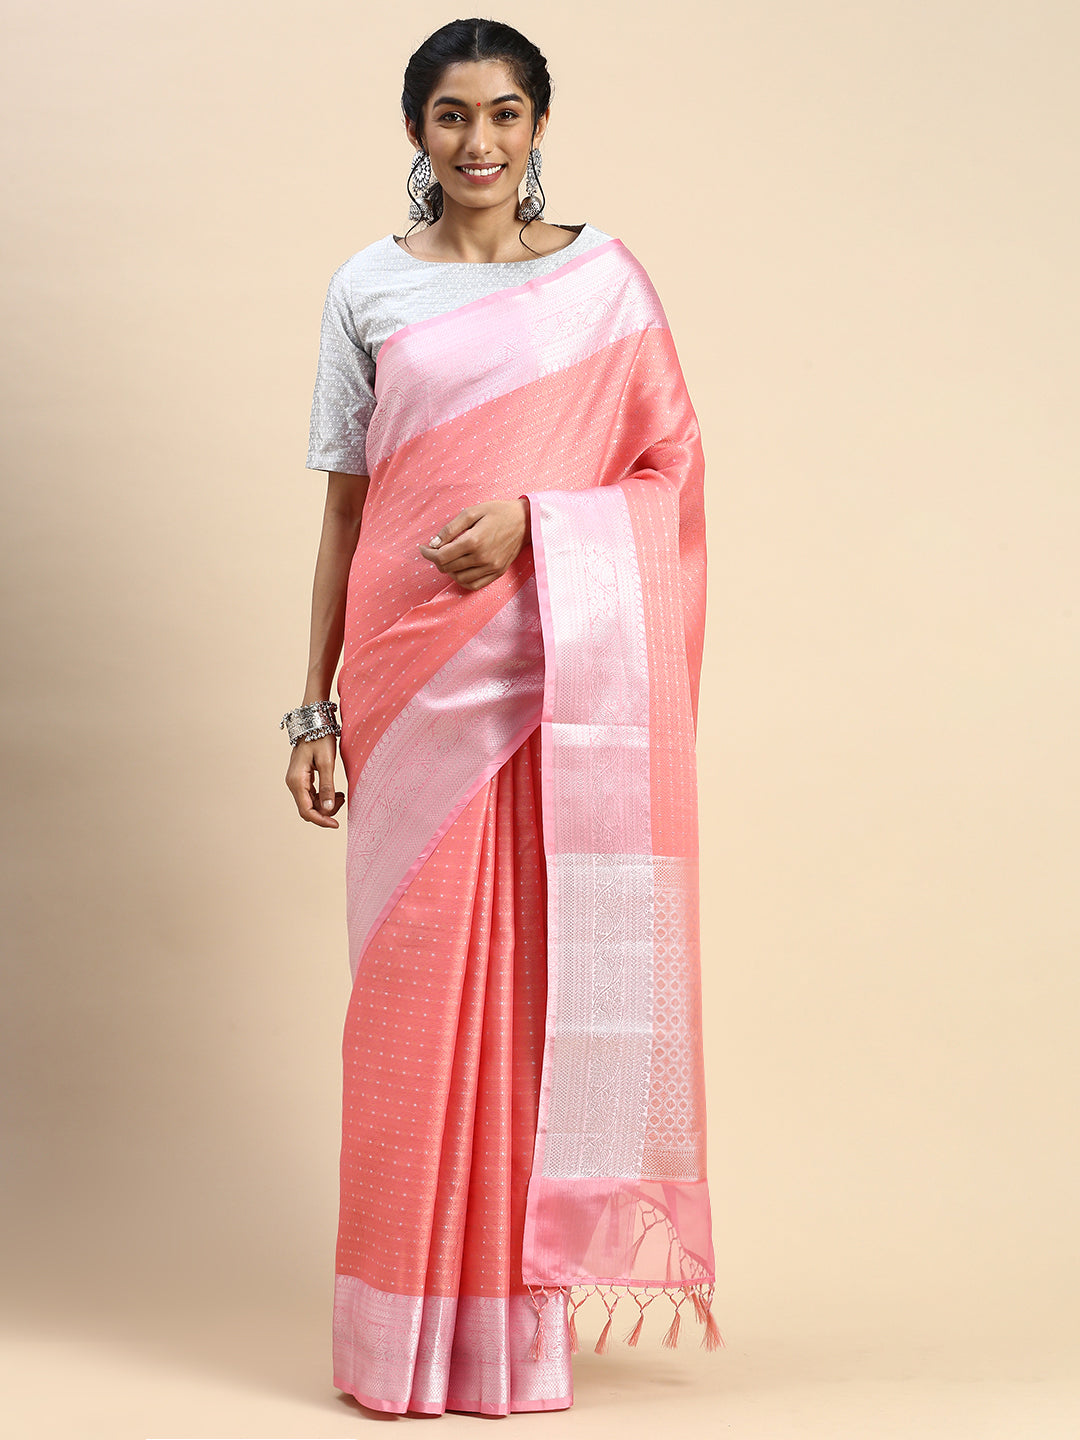 Cotton Sarees - Buy Cotton sarees upto 80-91% off - 1st Time